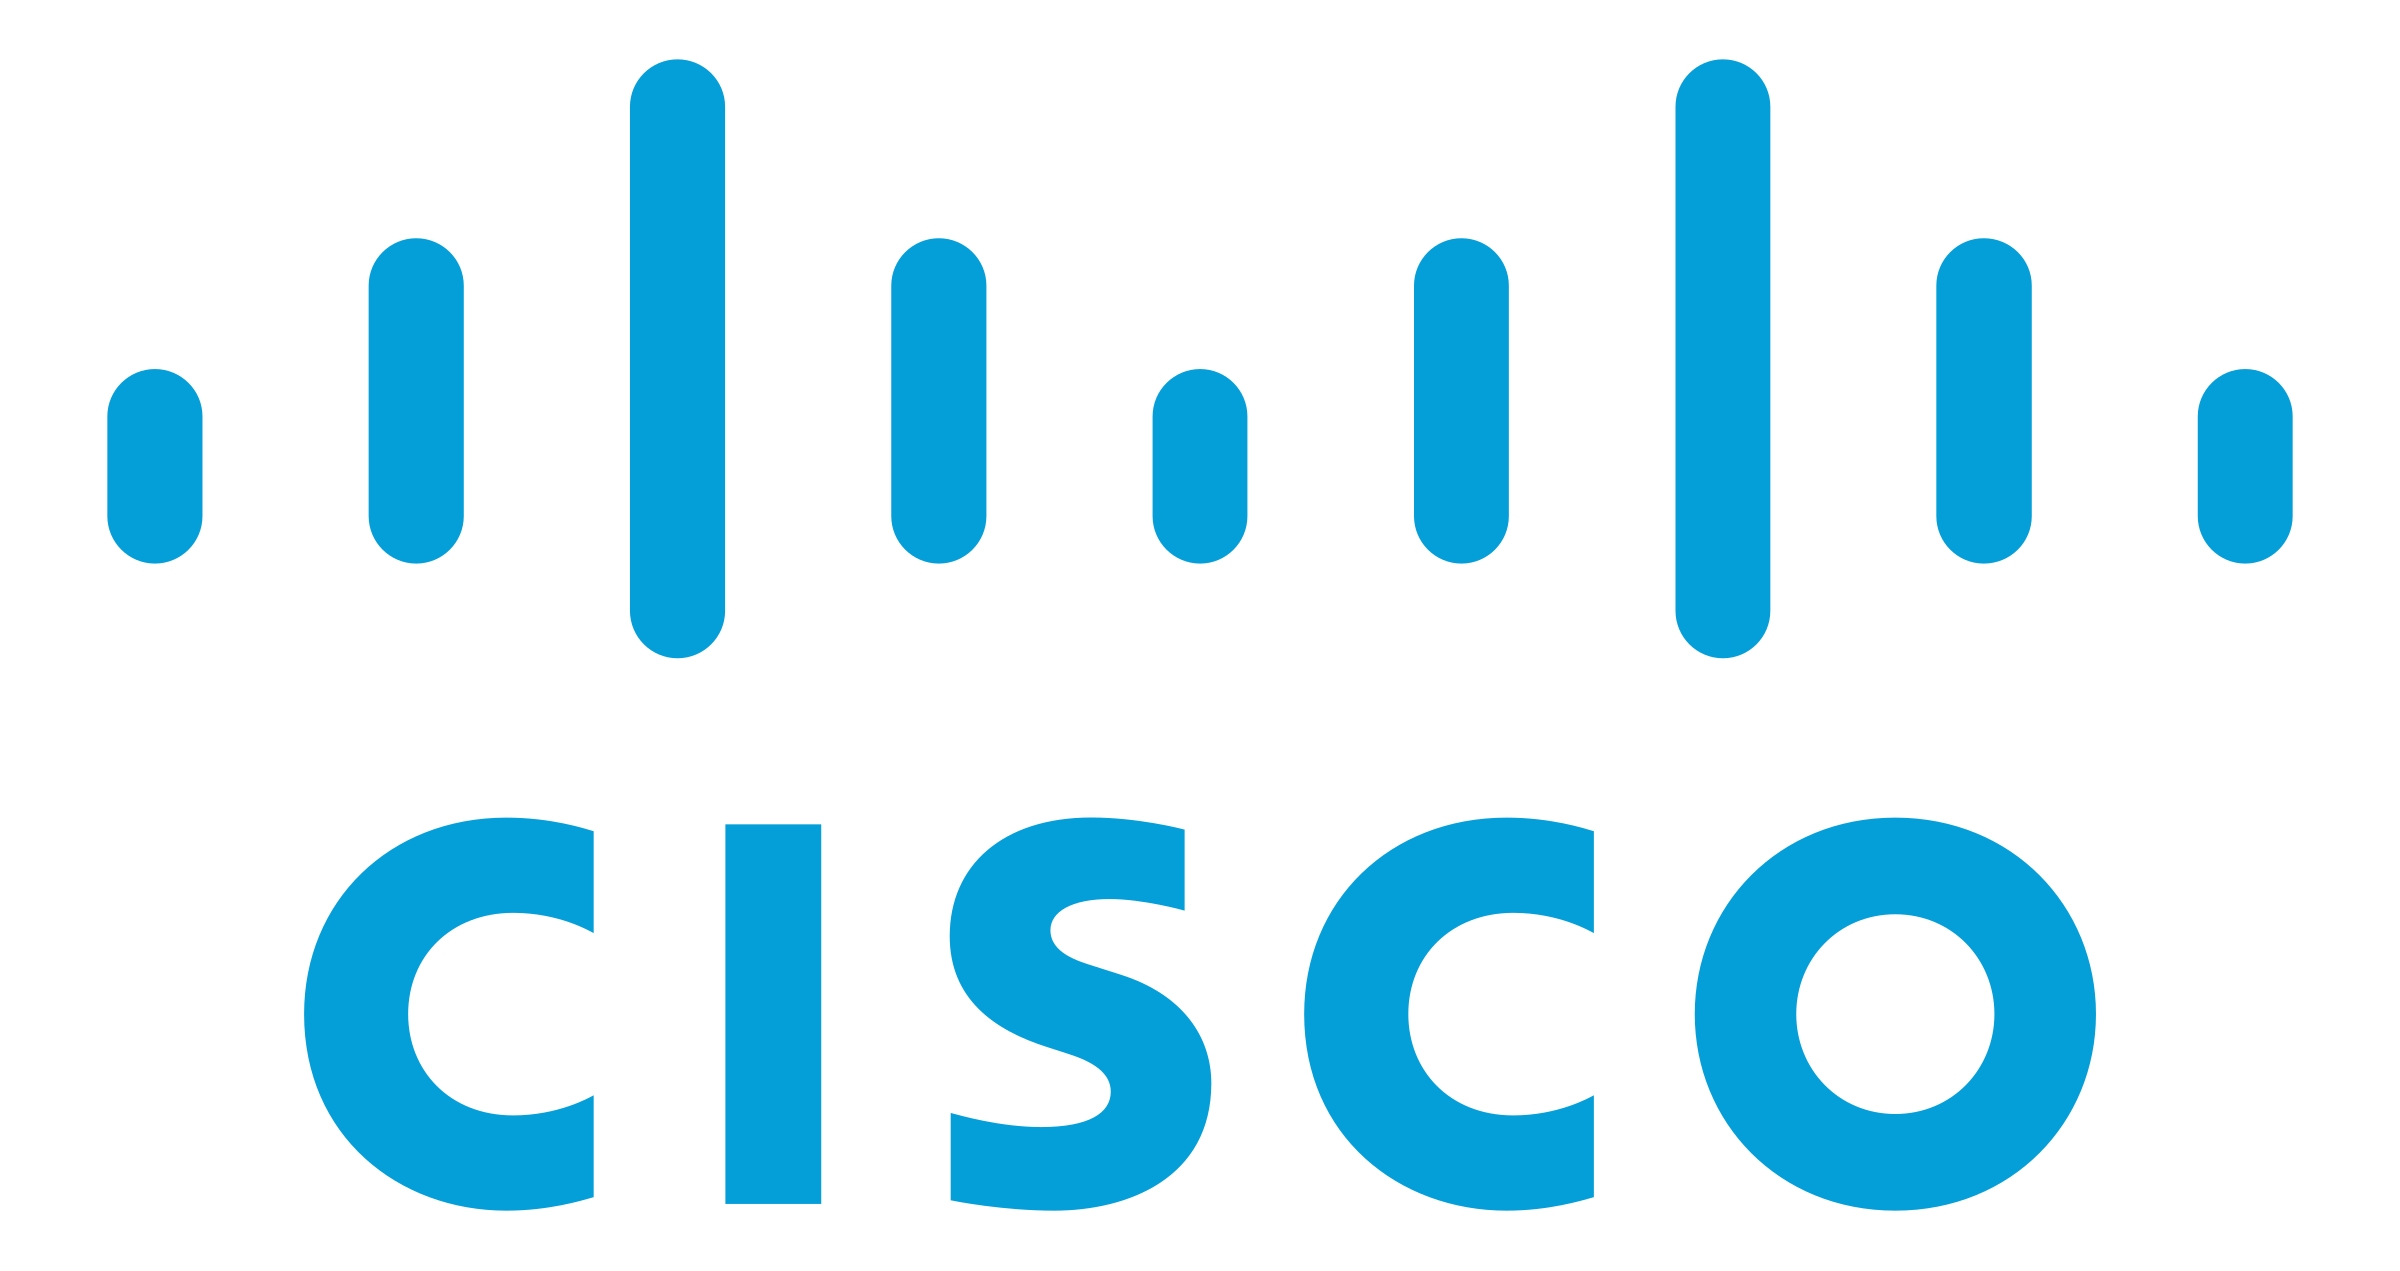 Cisco Certified Network Associate 4